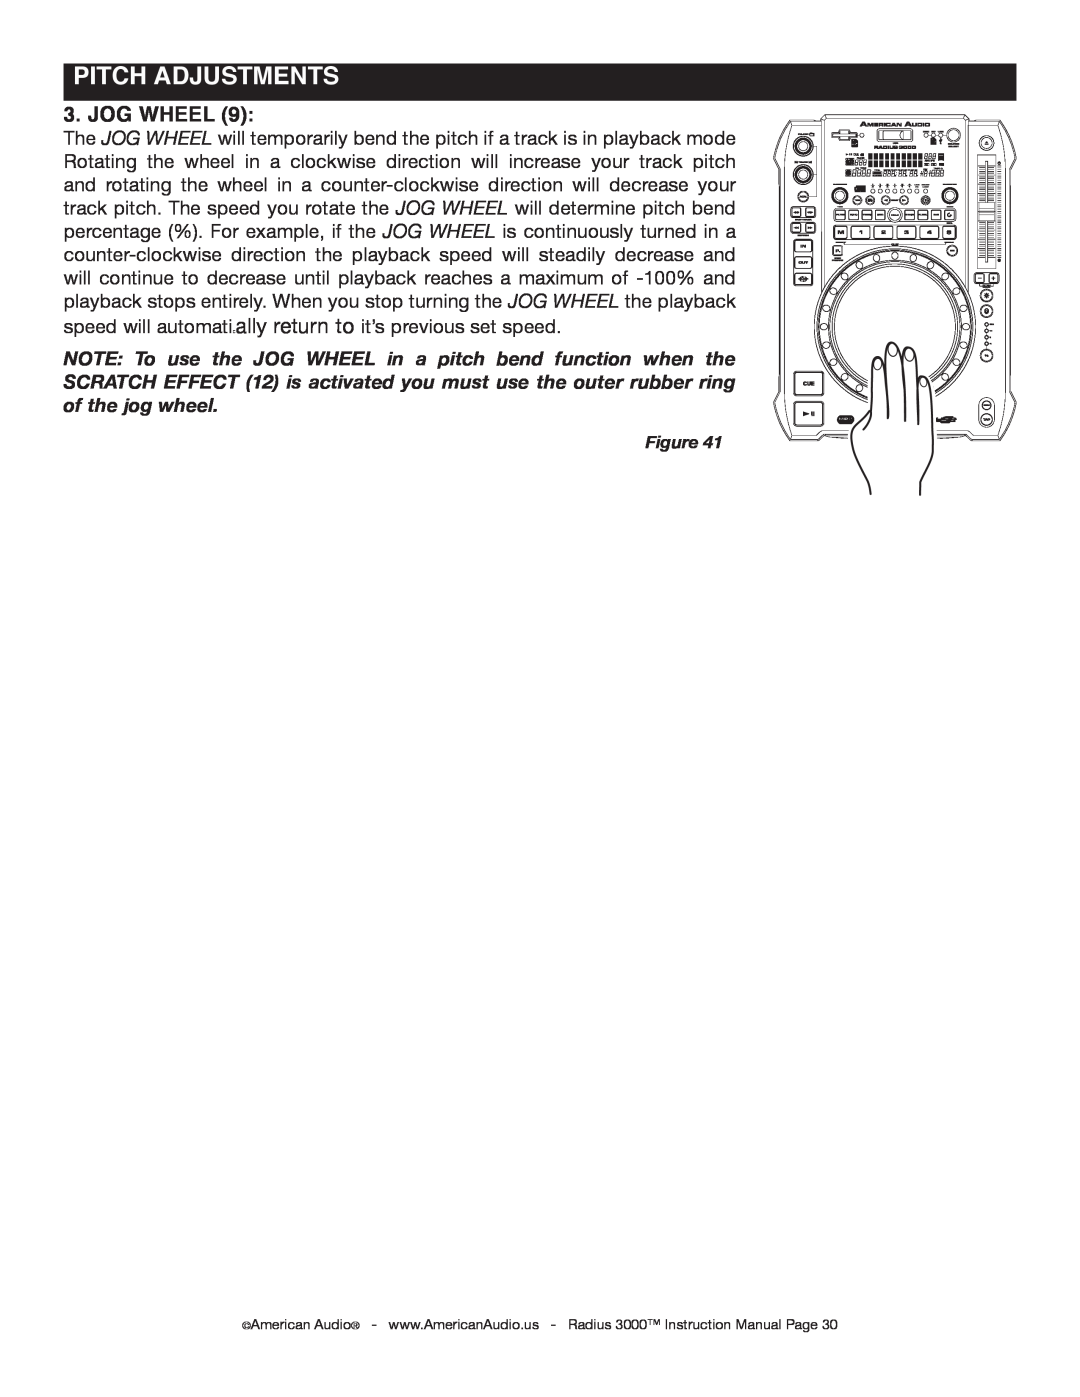 American Audio Radius 3000 manual Jog wheel, Pitch adjustments 